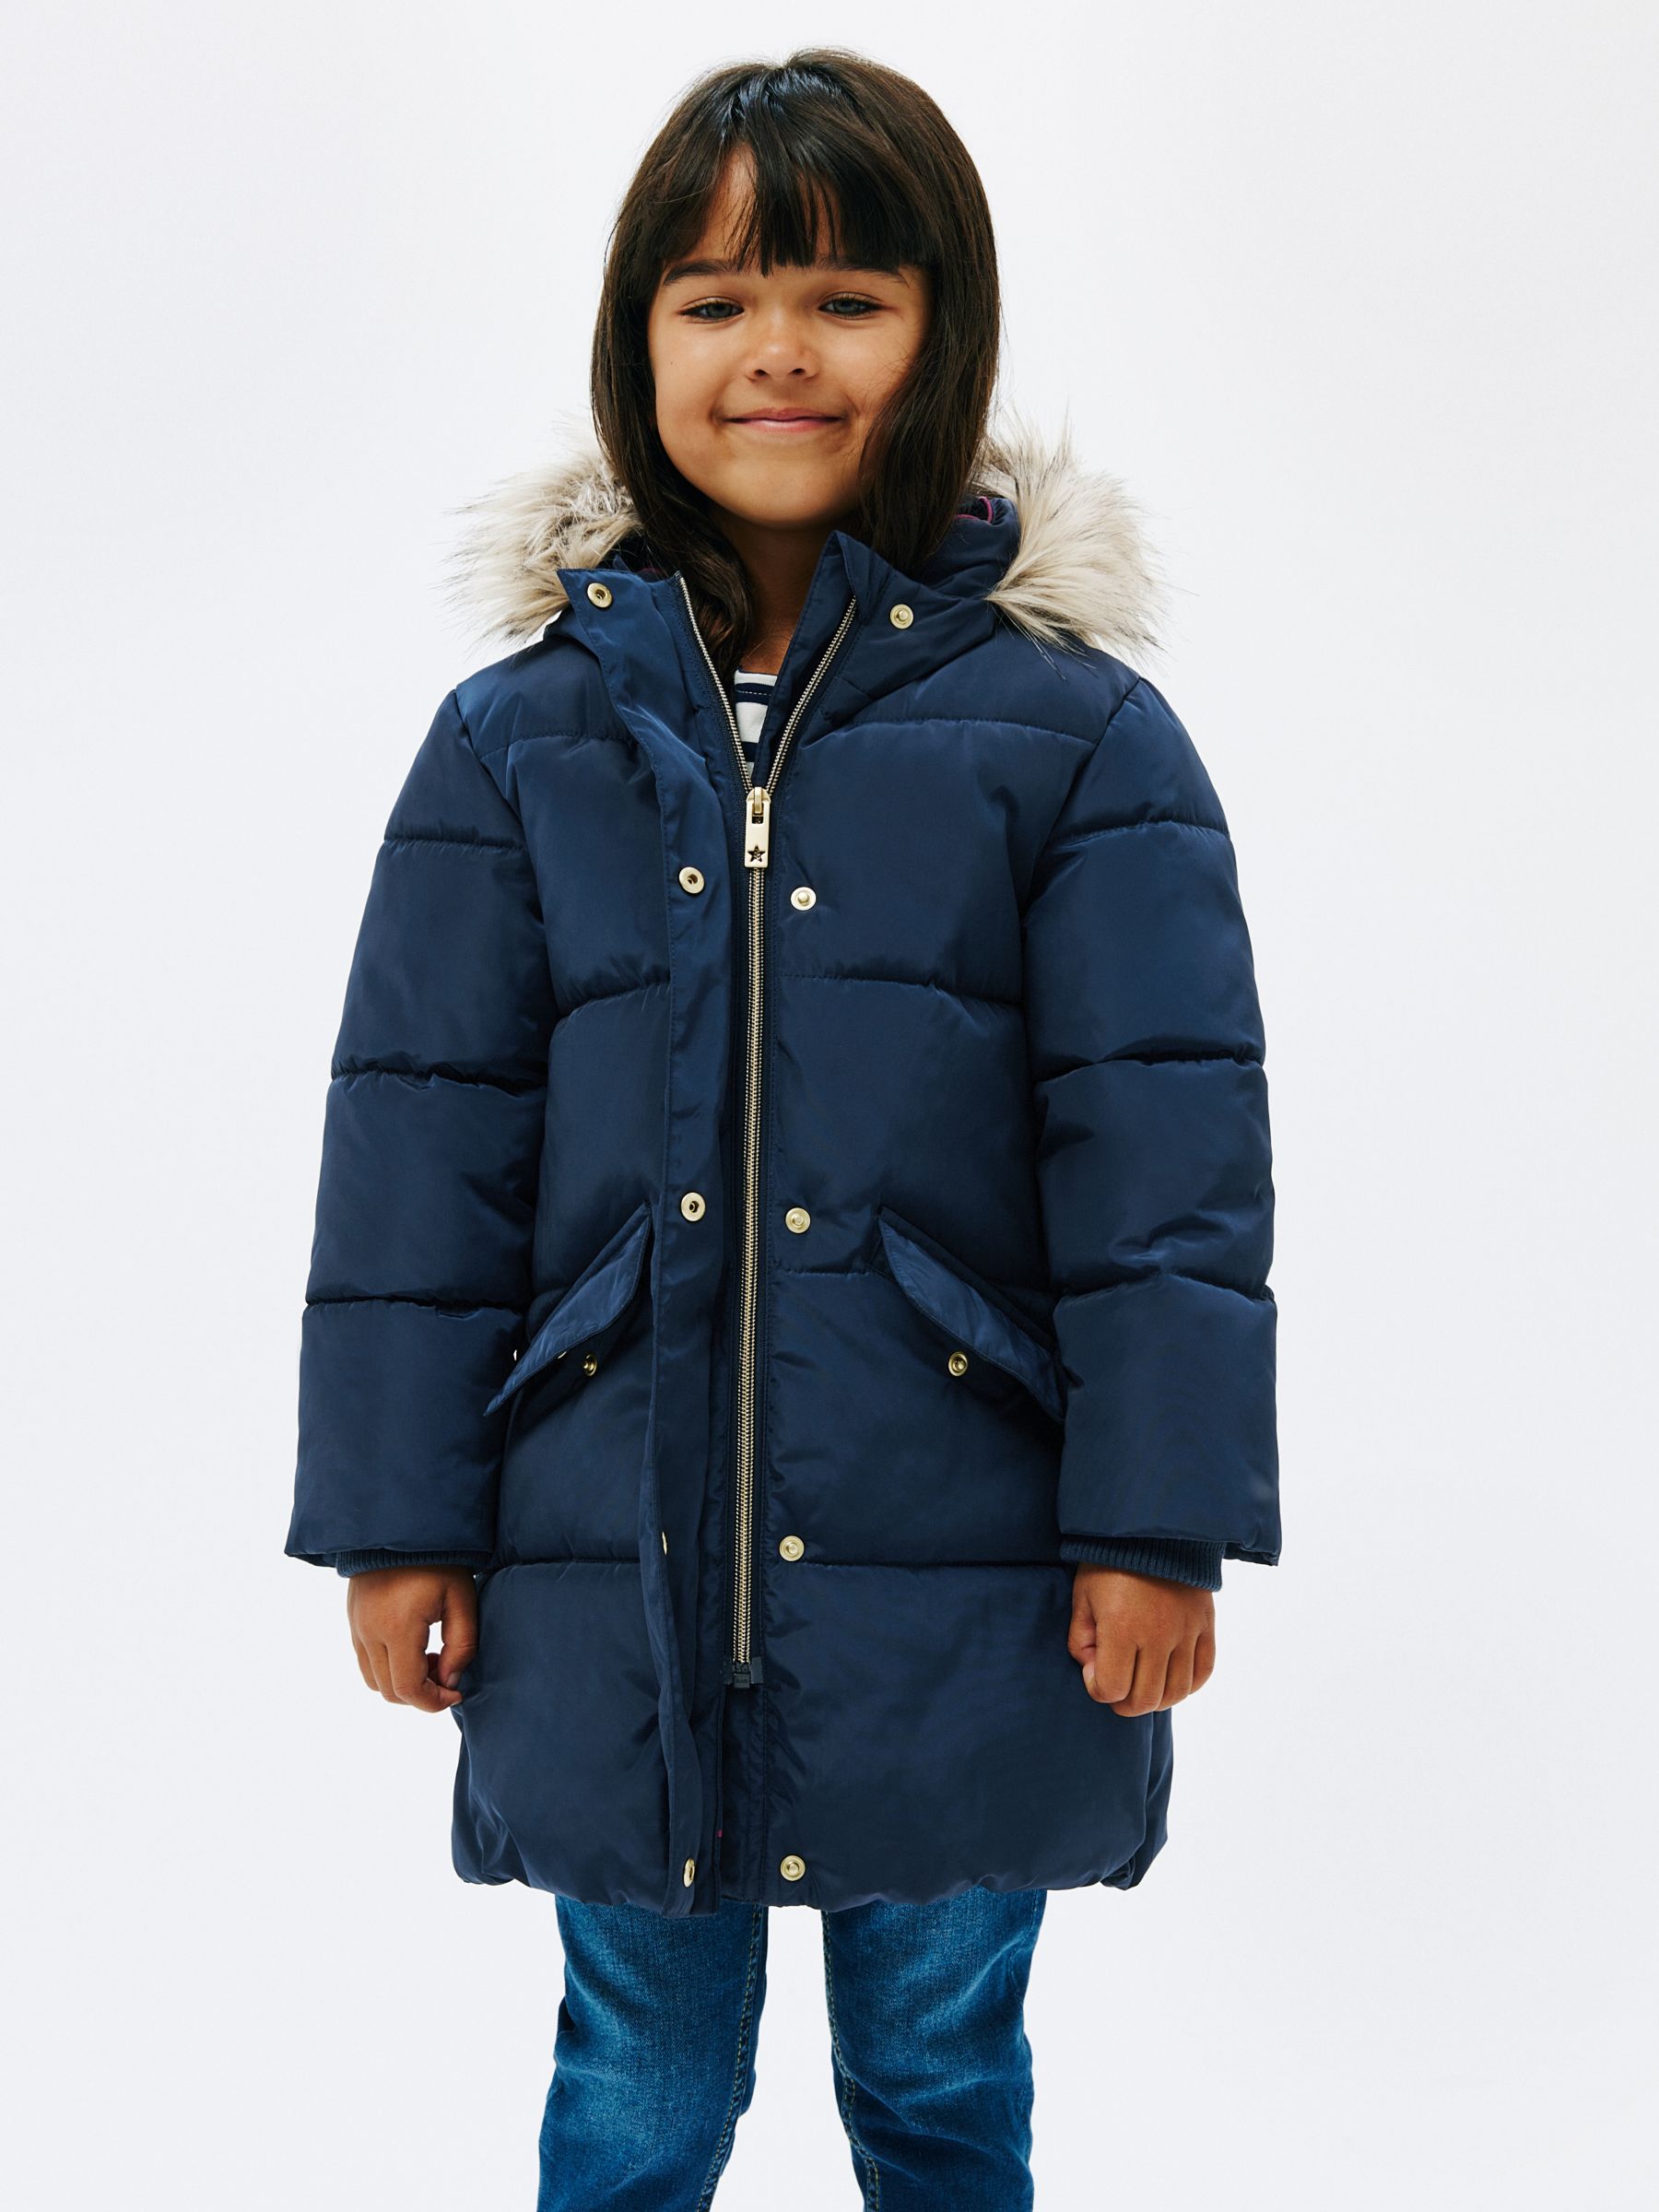 Little Girls Coats And Jackets | seeds.yonsei.ac.kr